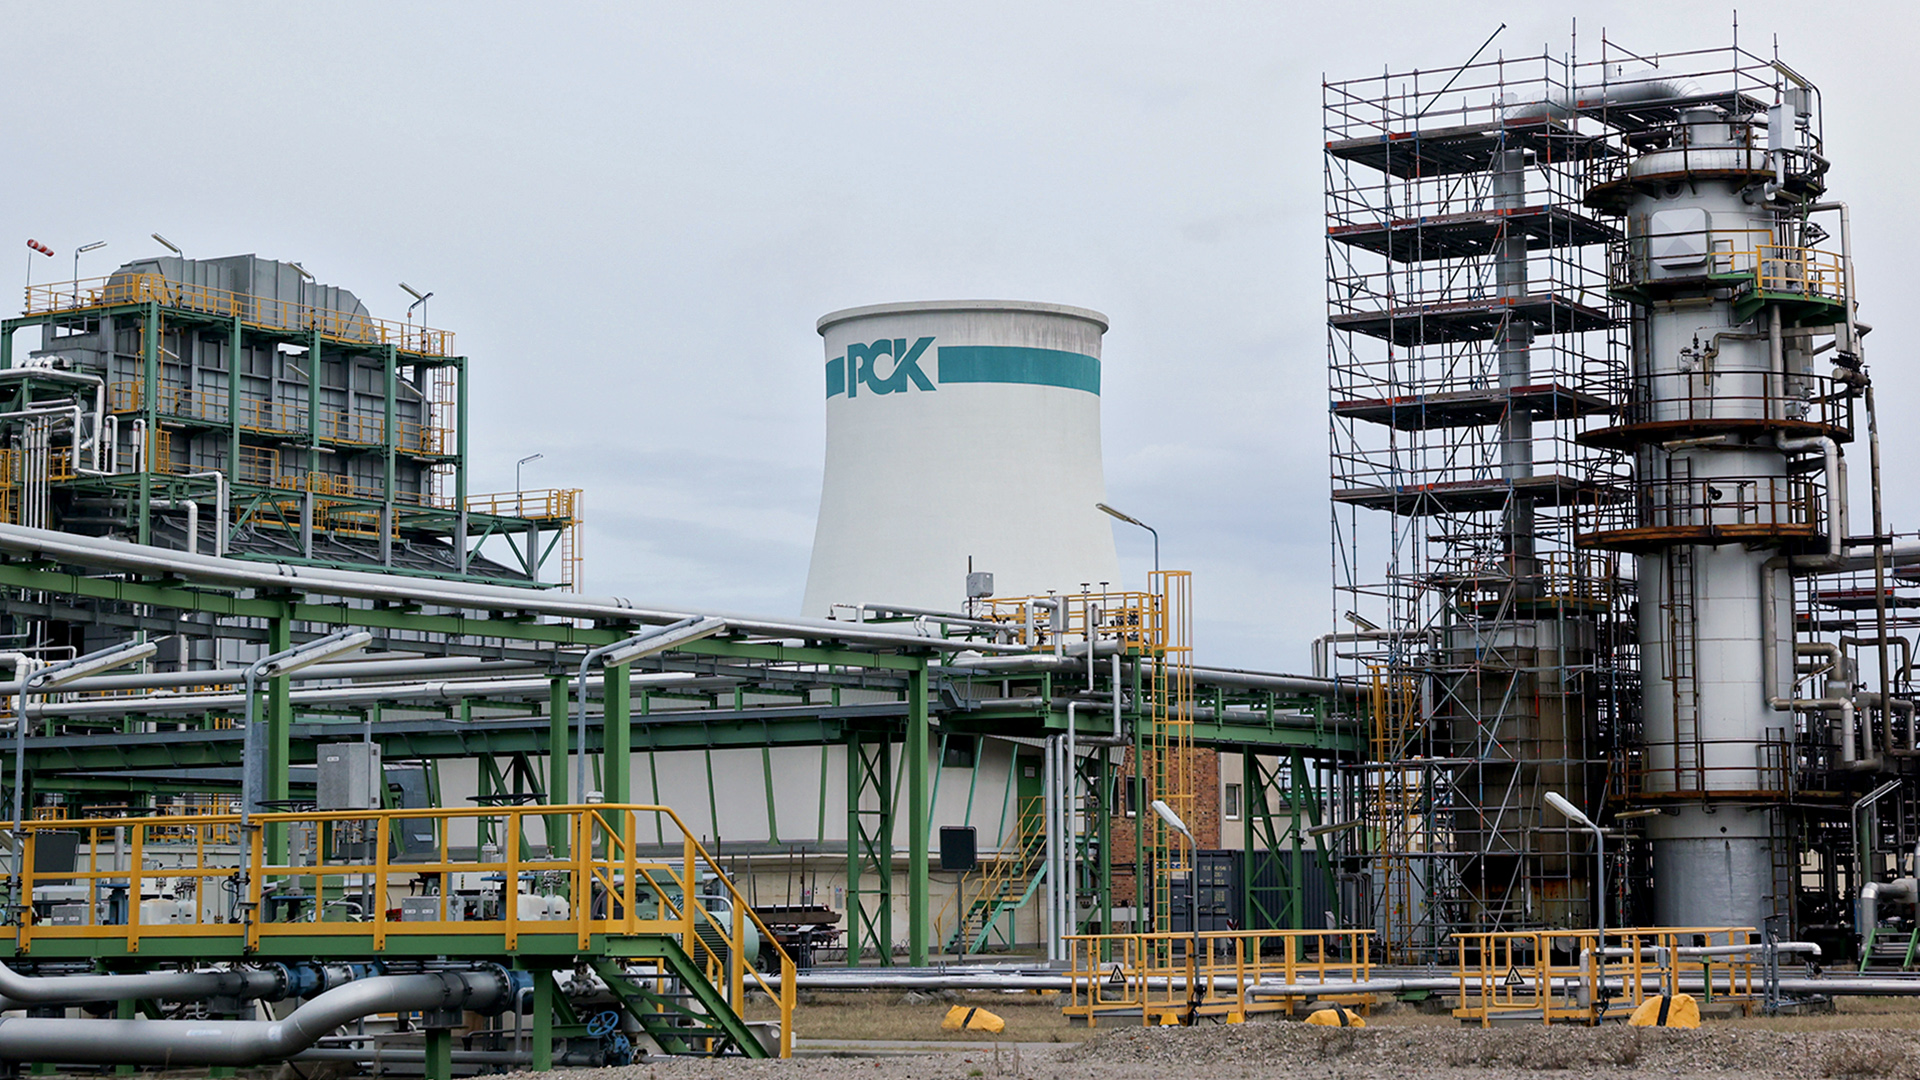 PCK-Raffinerie in Schwedt | dpa